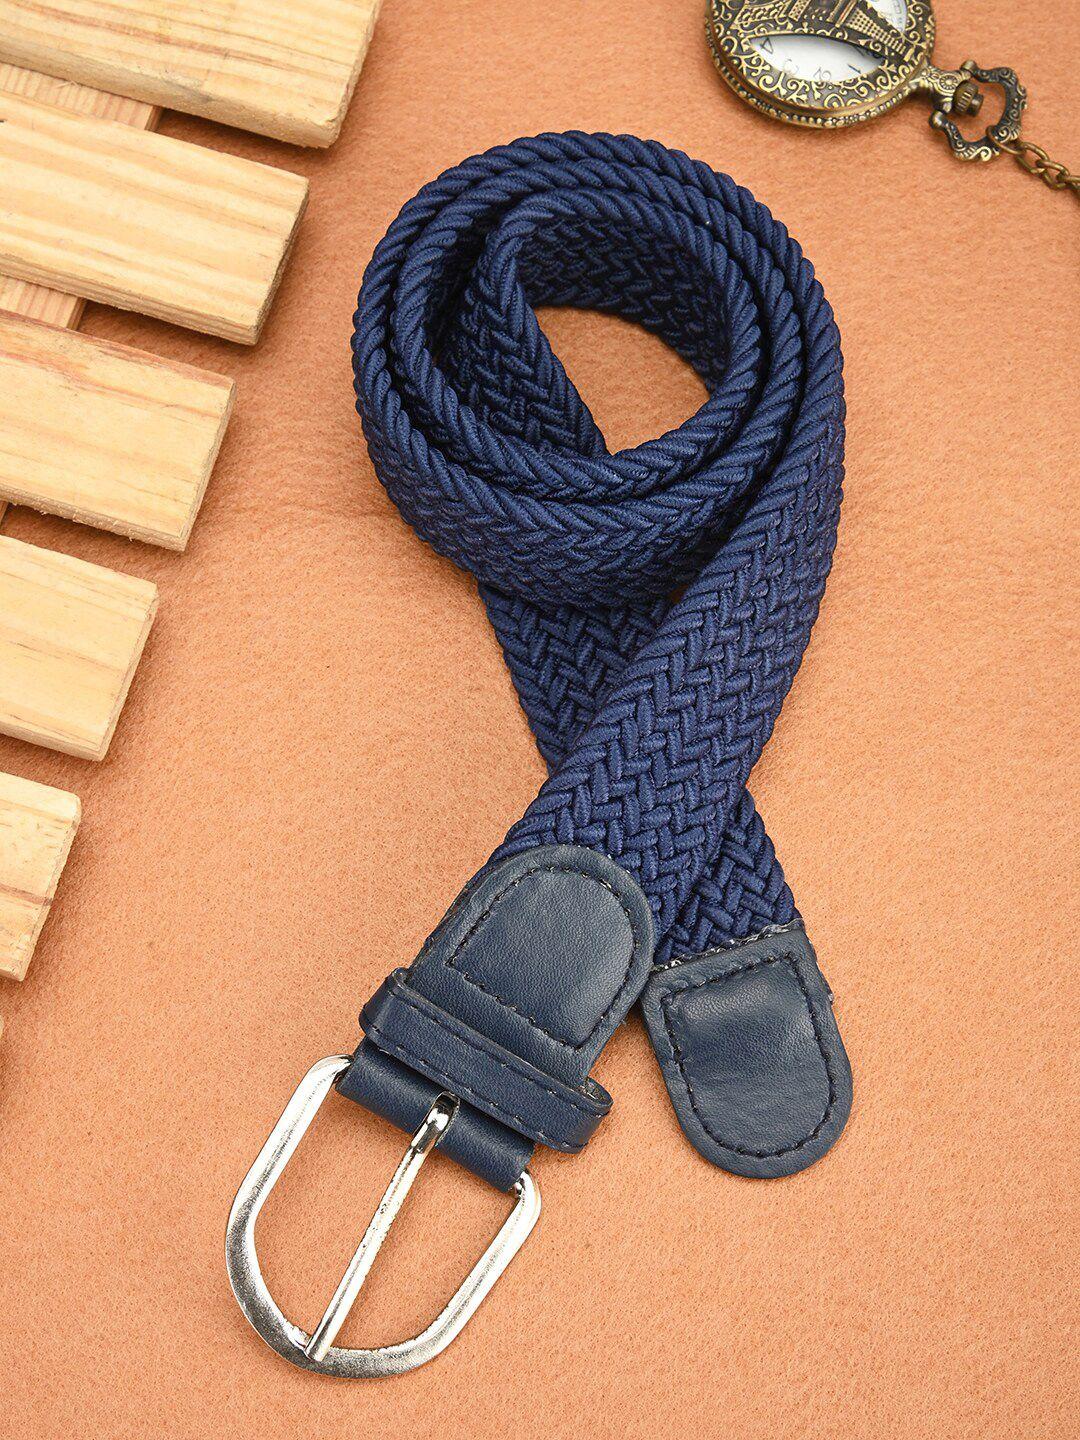 buckleup unisex braided stretchable belt